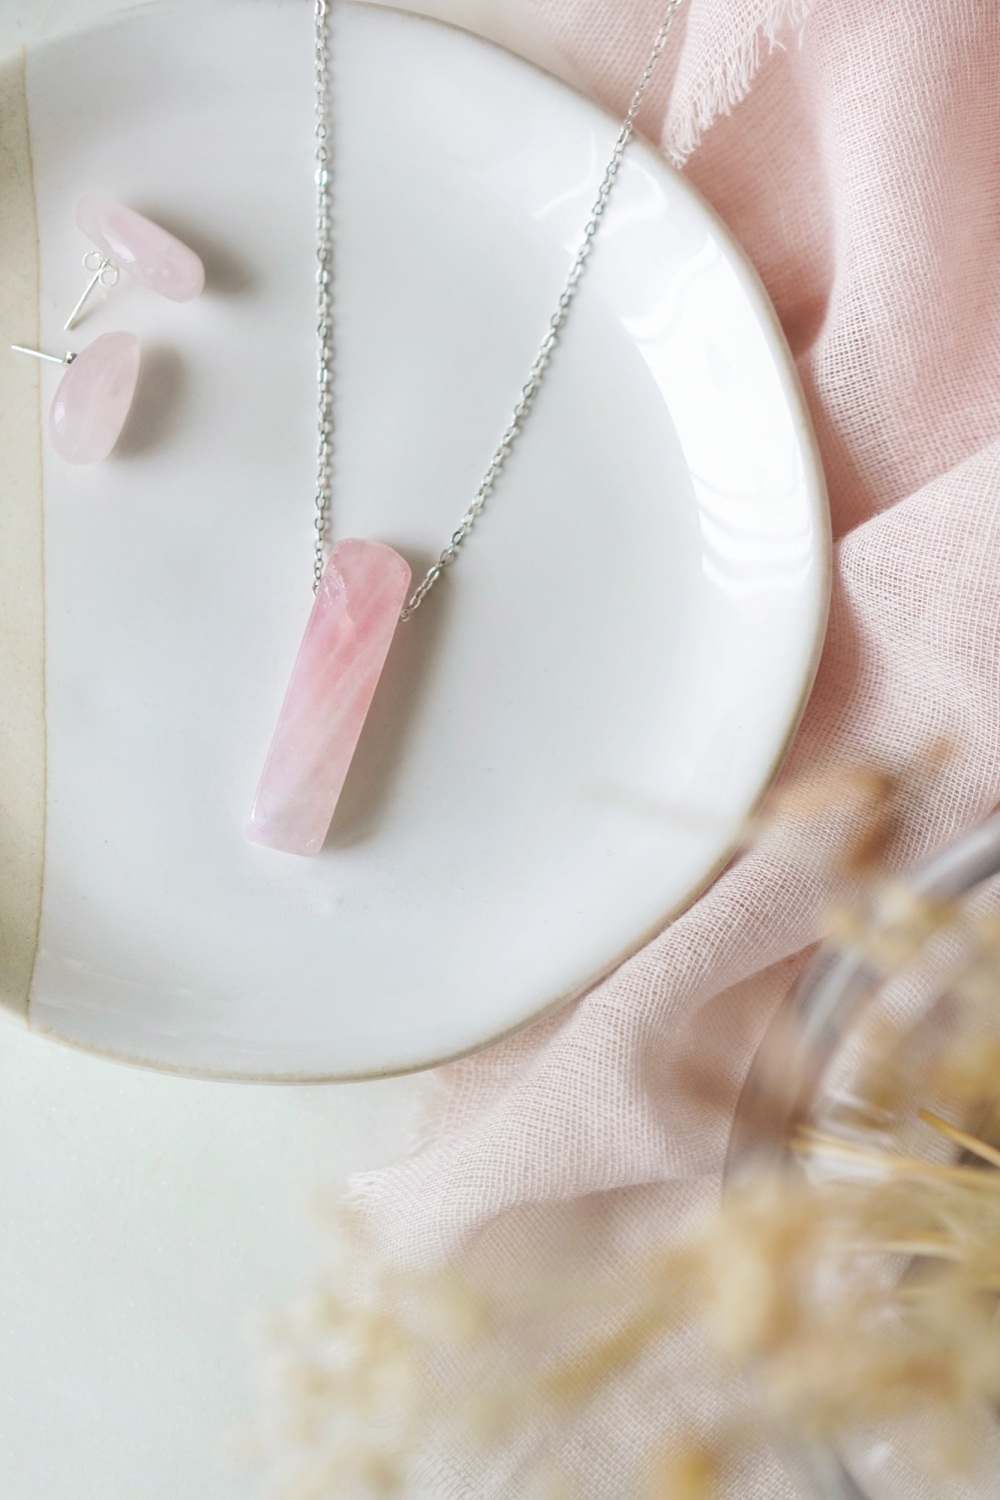 Cherry Quartz necklace choker Sterling Silver small pink gemstone pendant  Healing Crystal broken heart anxiety - Heart Chakra jewellery Gift